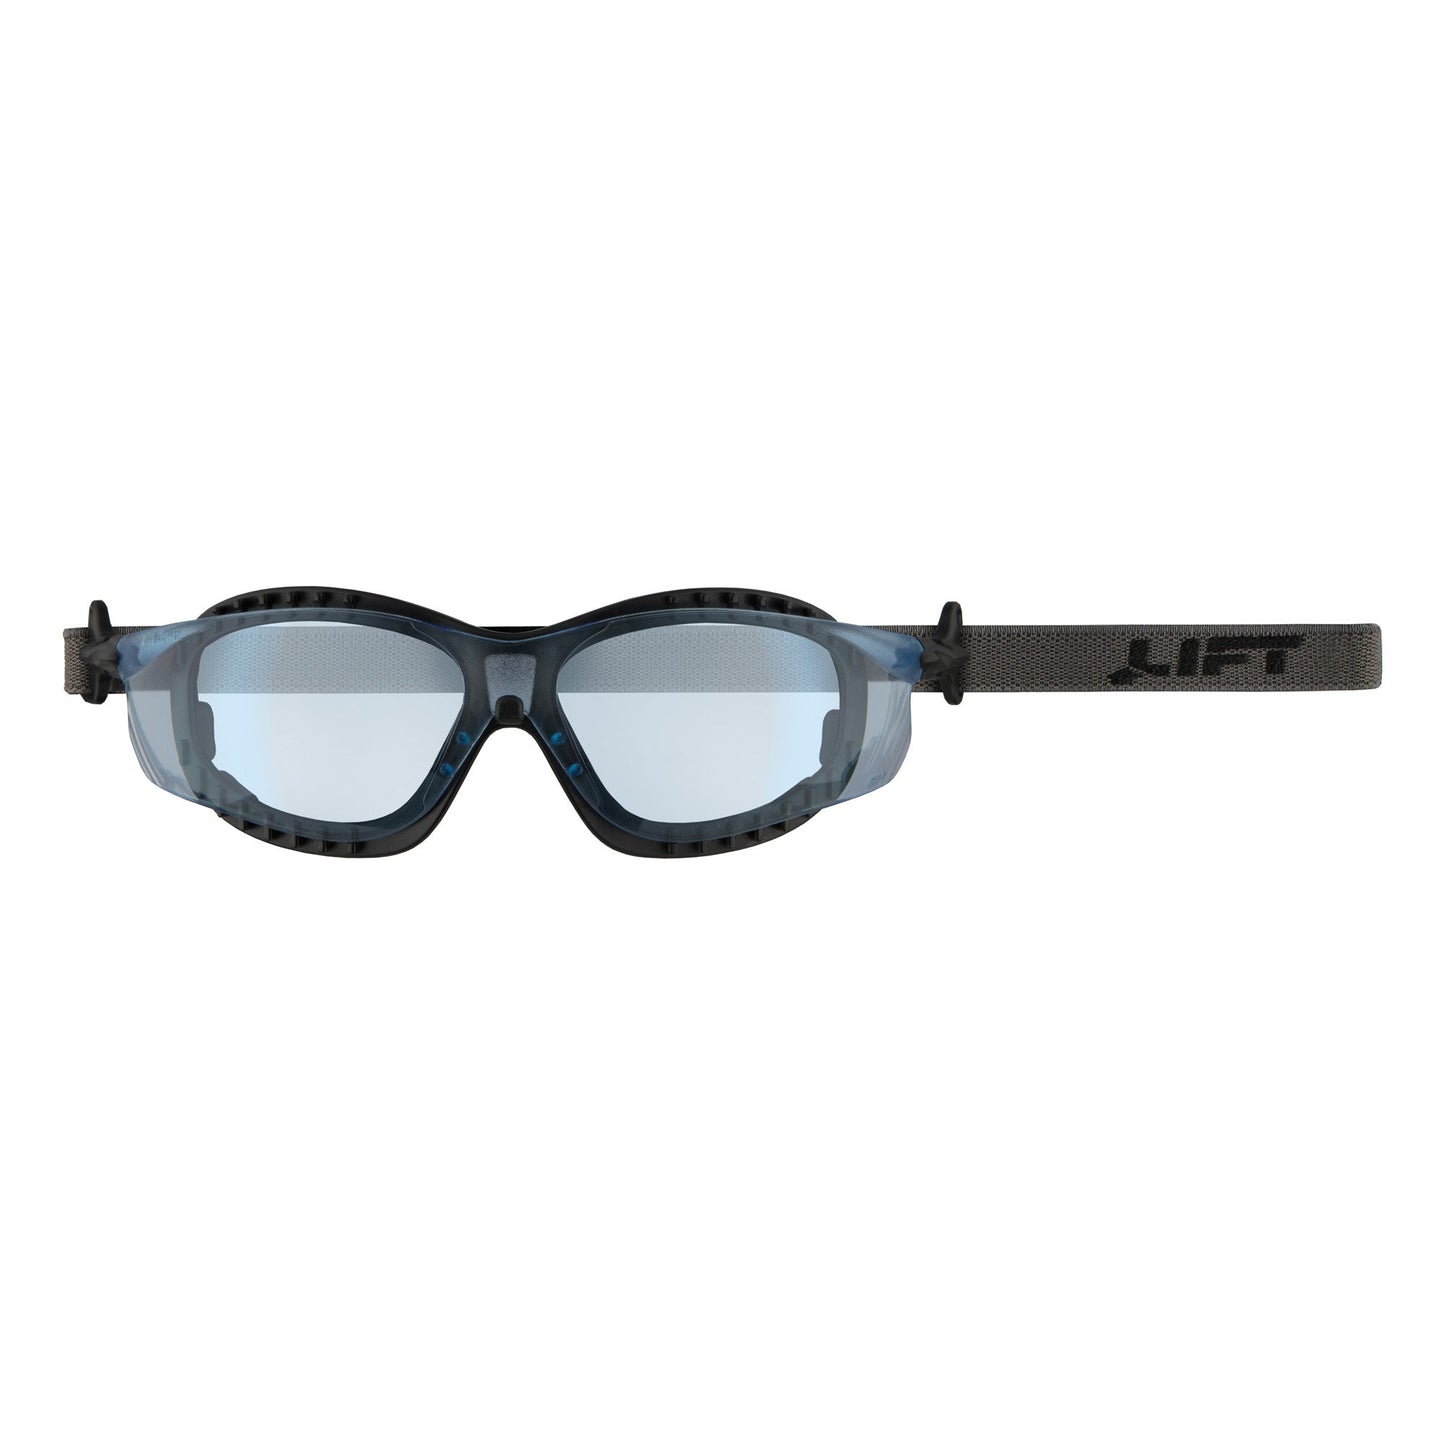 LIFT Safety - SECTOR HYBRID Safety Glasses